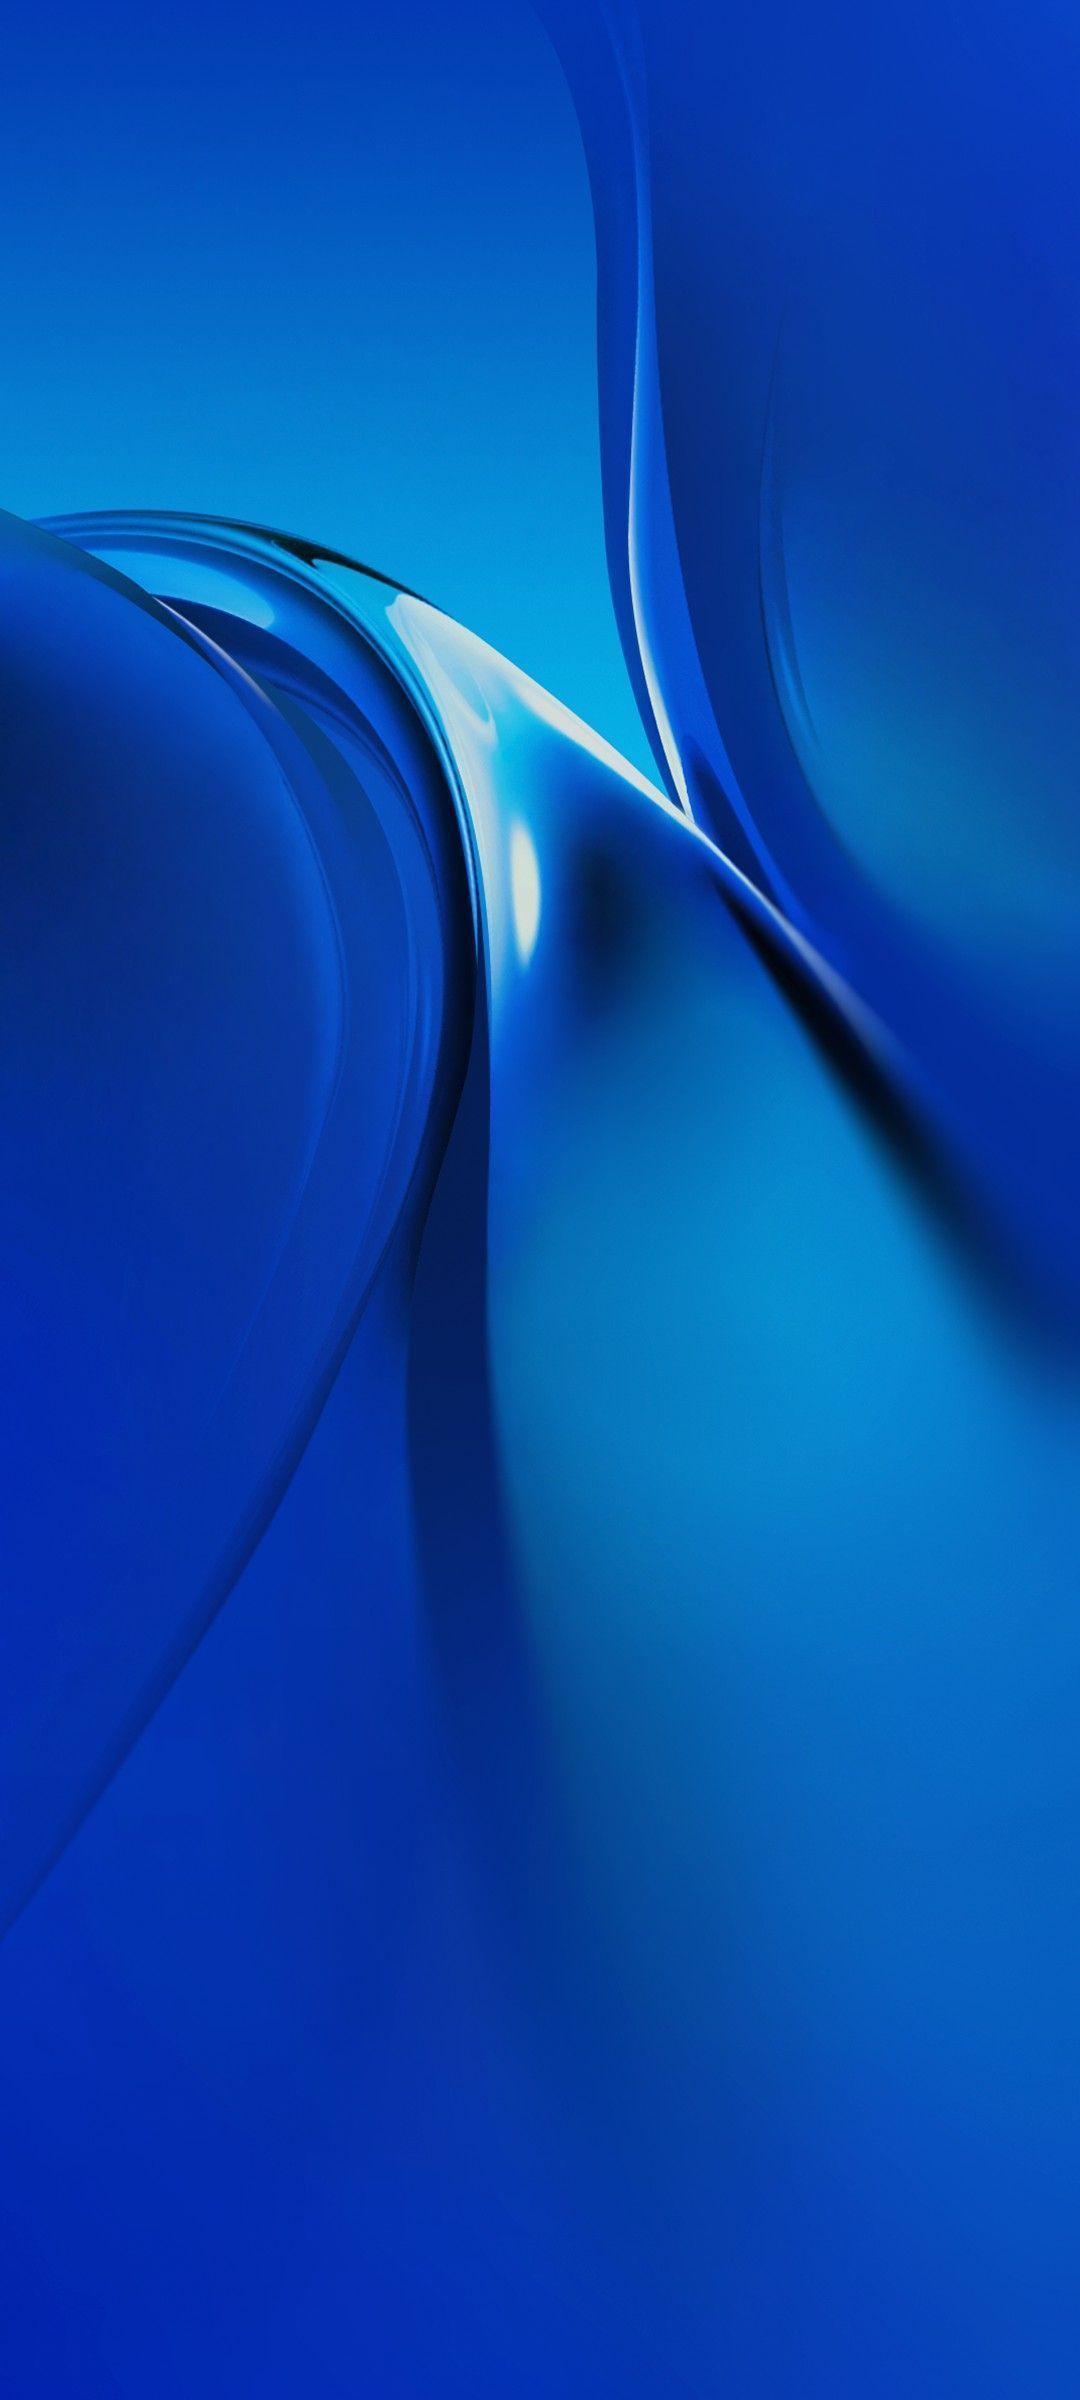 1080 x 2400 · jpeg - samsung wallpaper lock screen blue | Galaxy phone wallpaper, Samsung ...